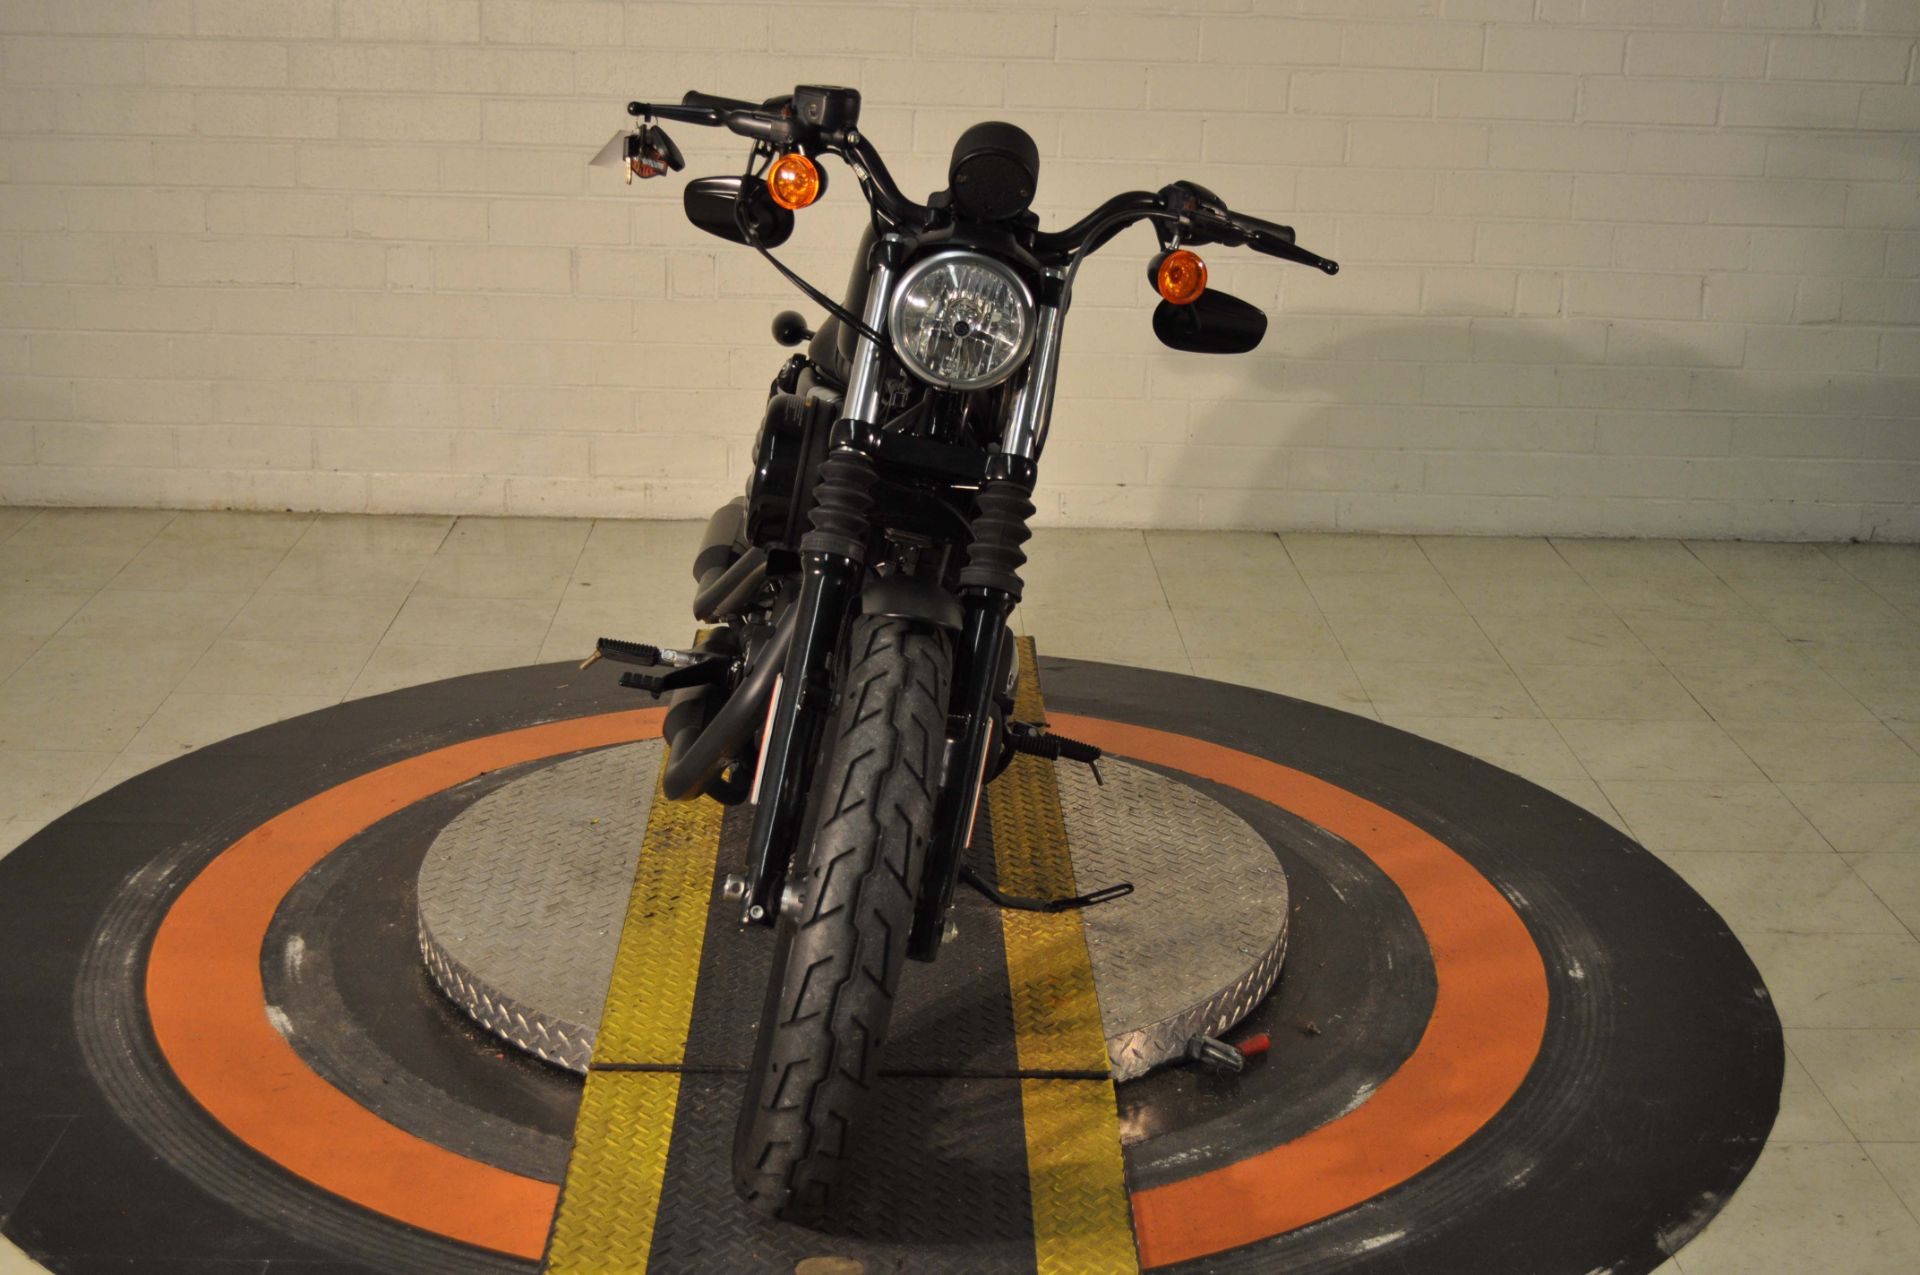 2020 Harley-Davidson Iron 883™ in Winston Salem, North Carolina - Photo 8